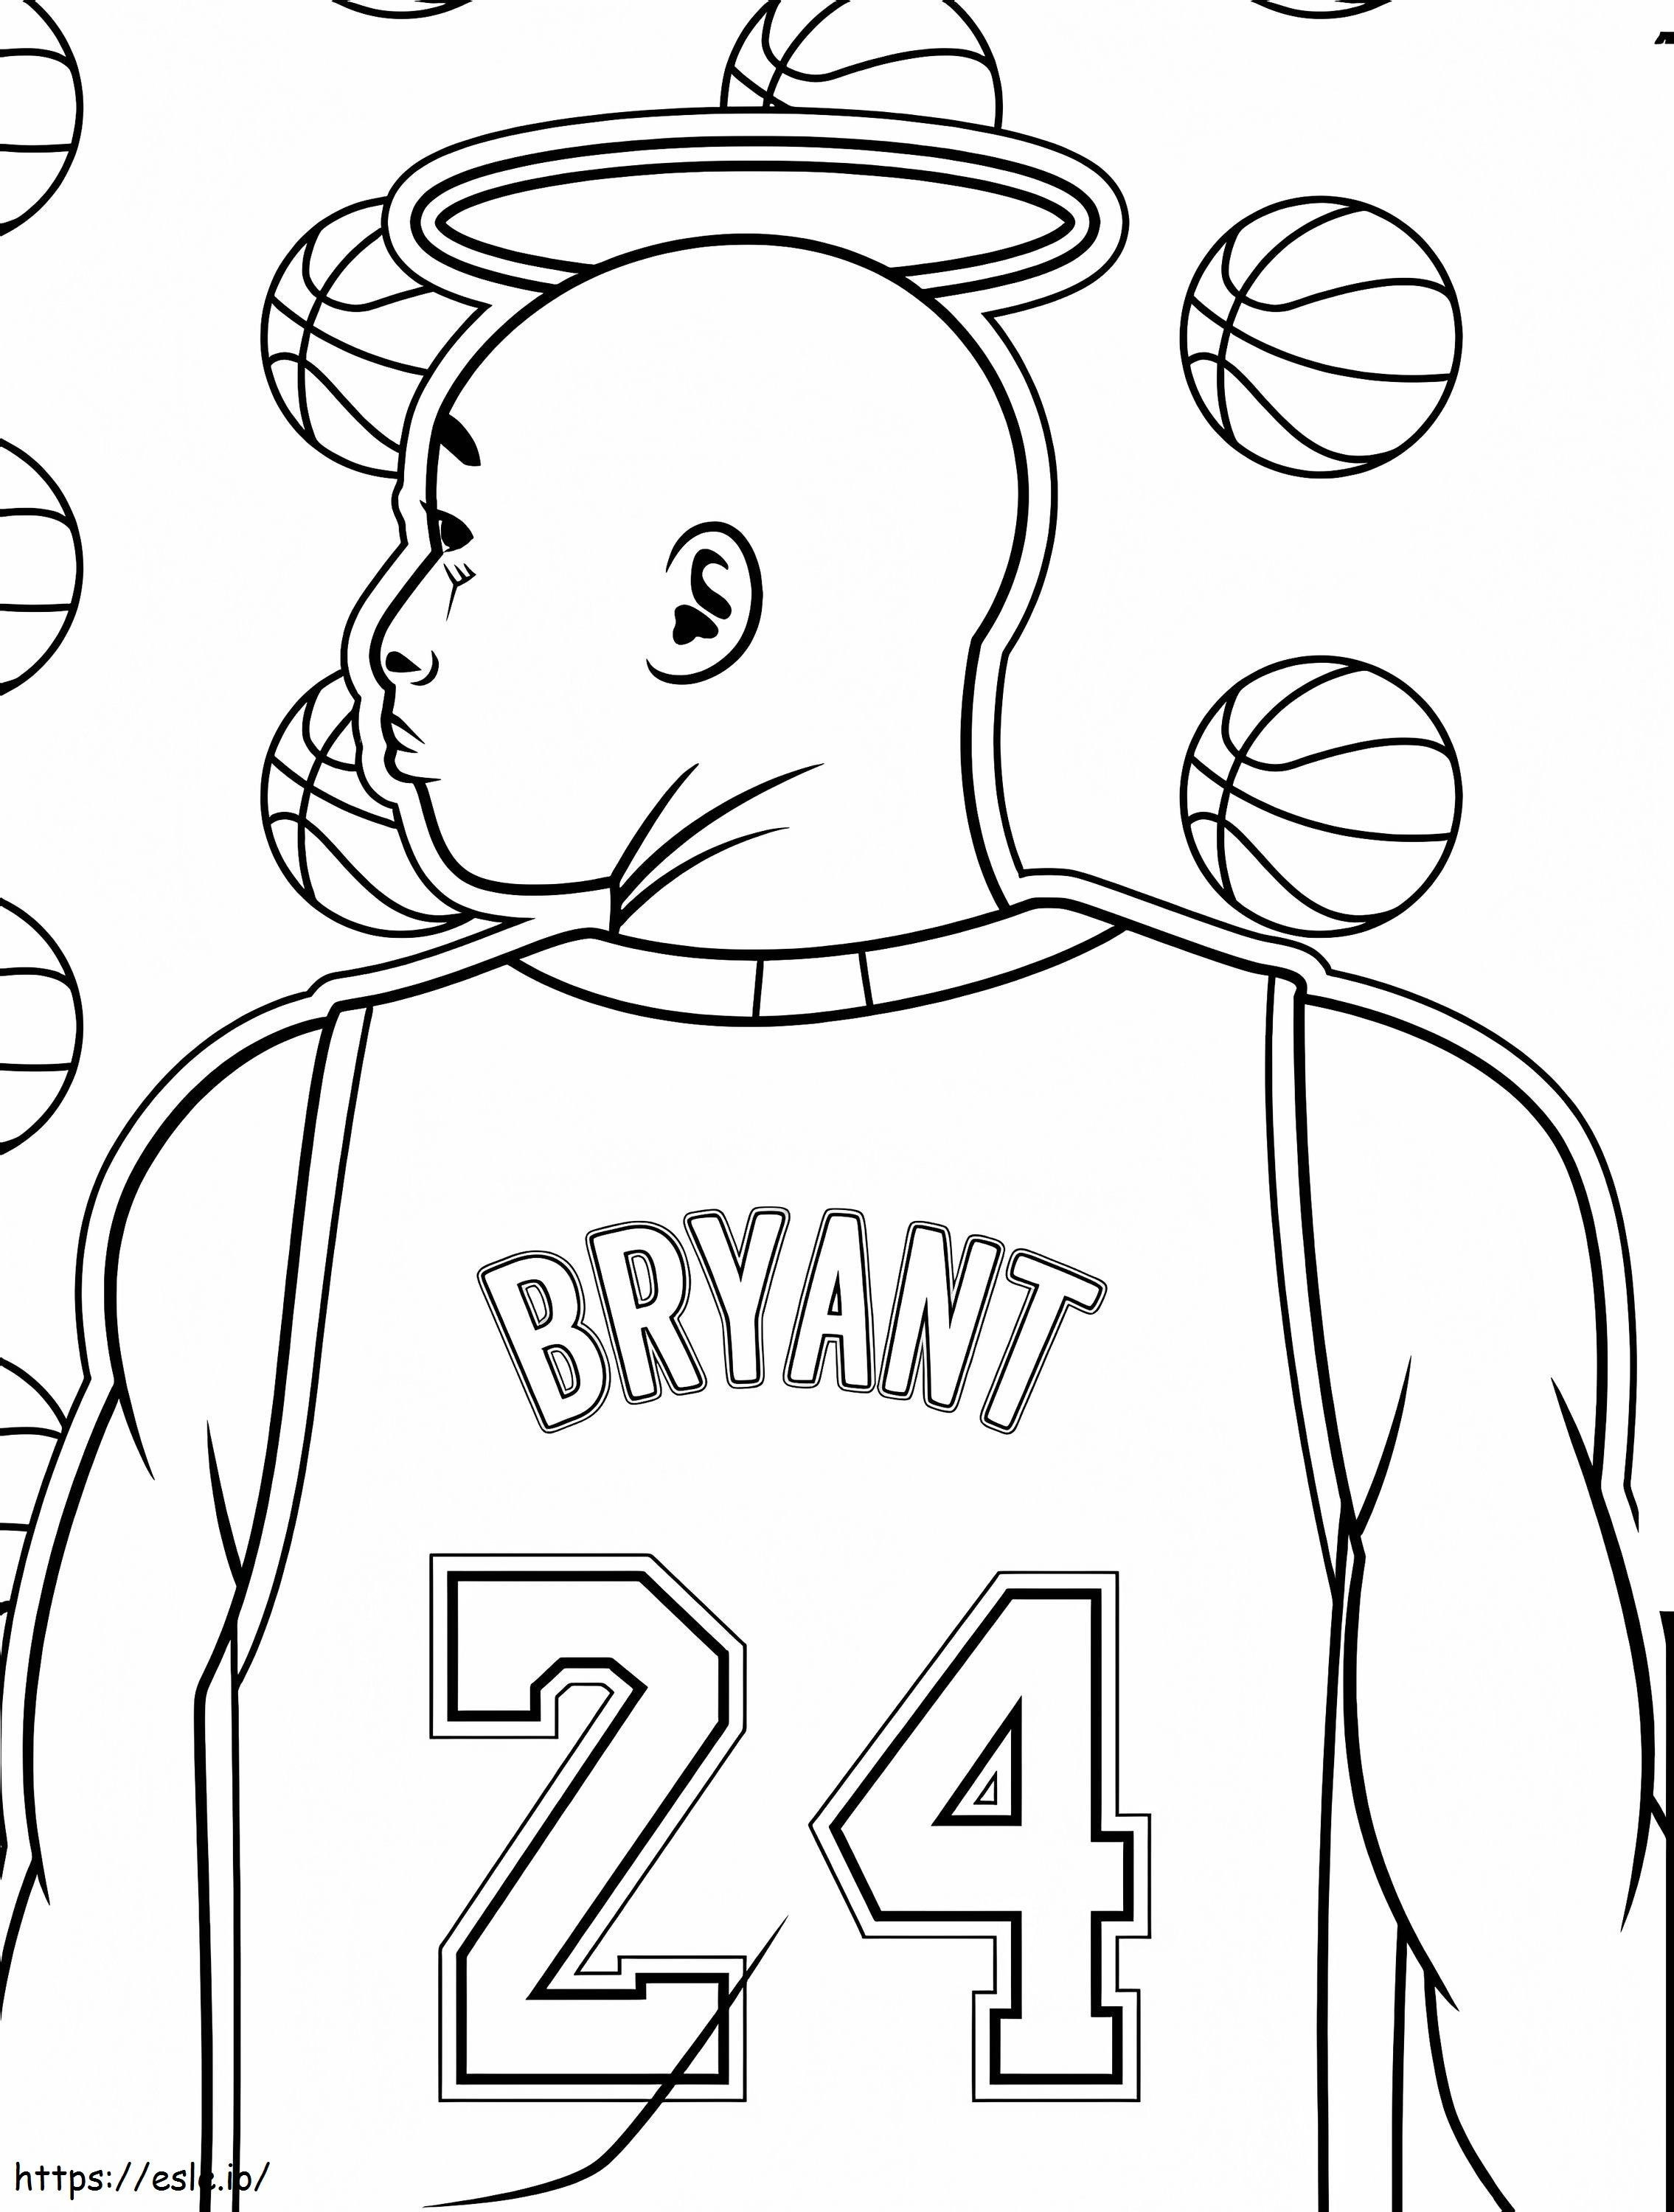 Incrível Kobe Bryant para colorir